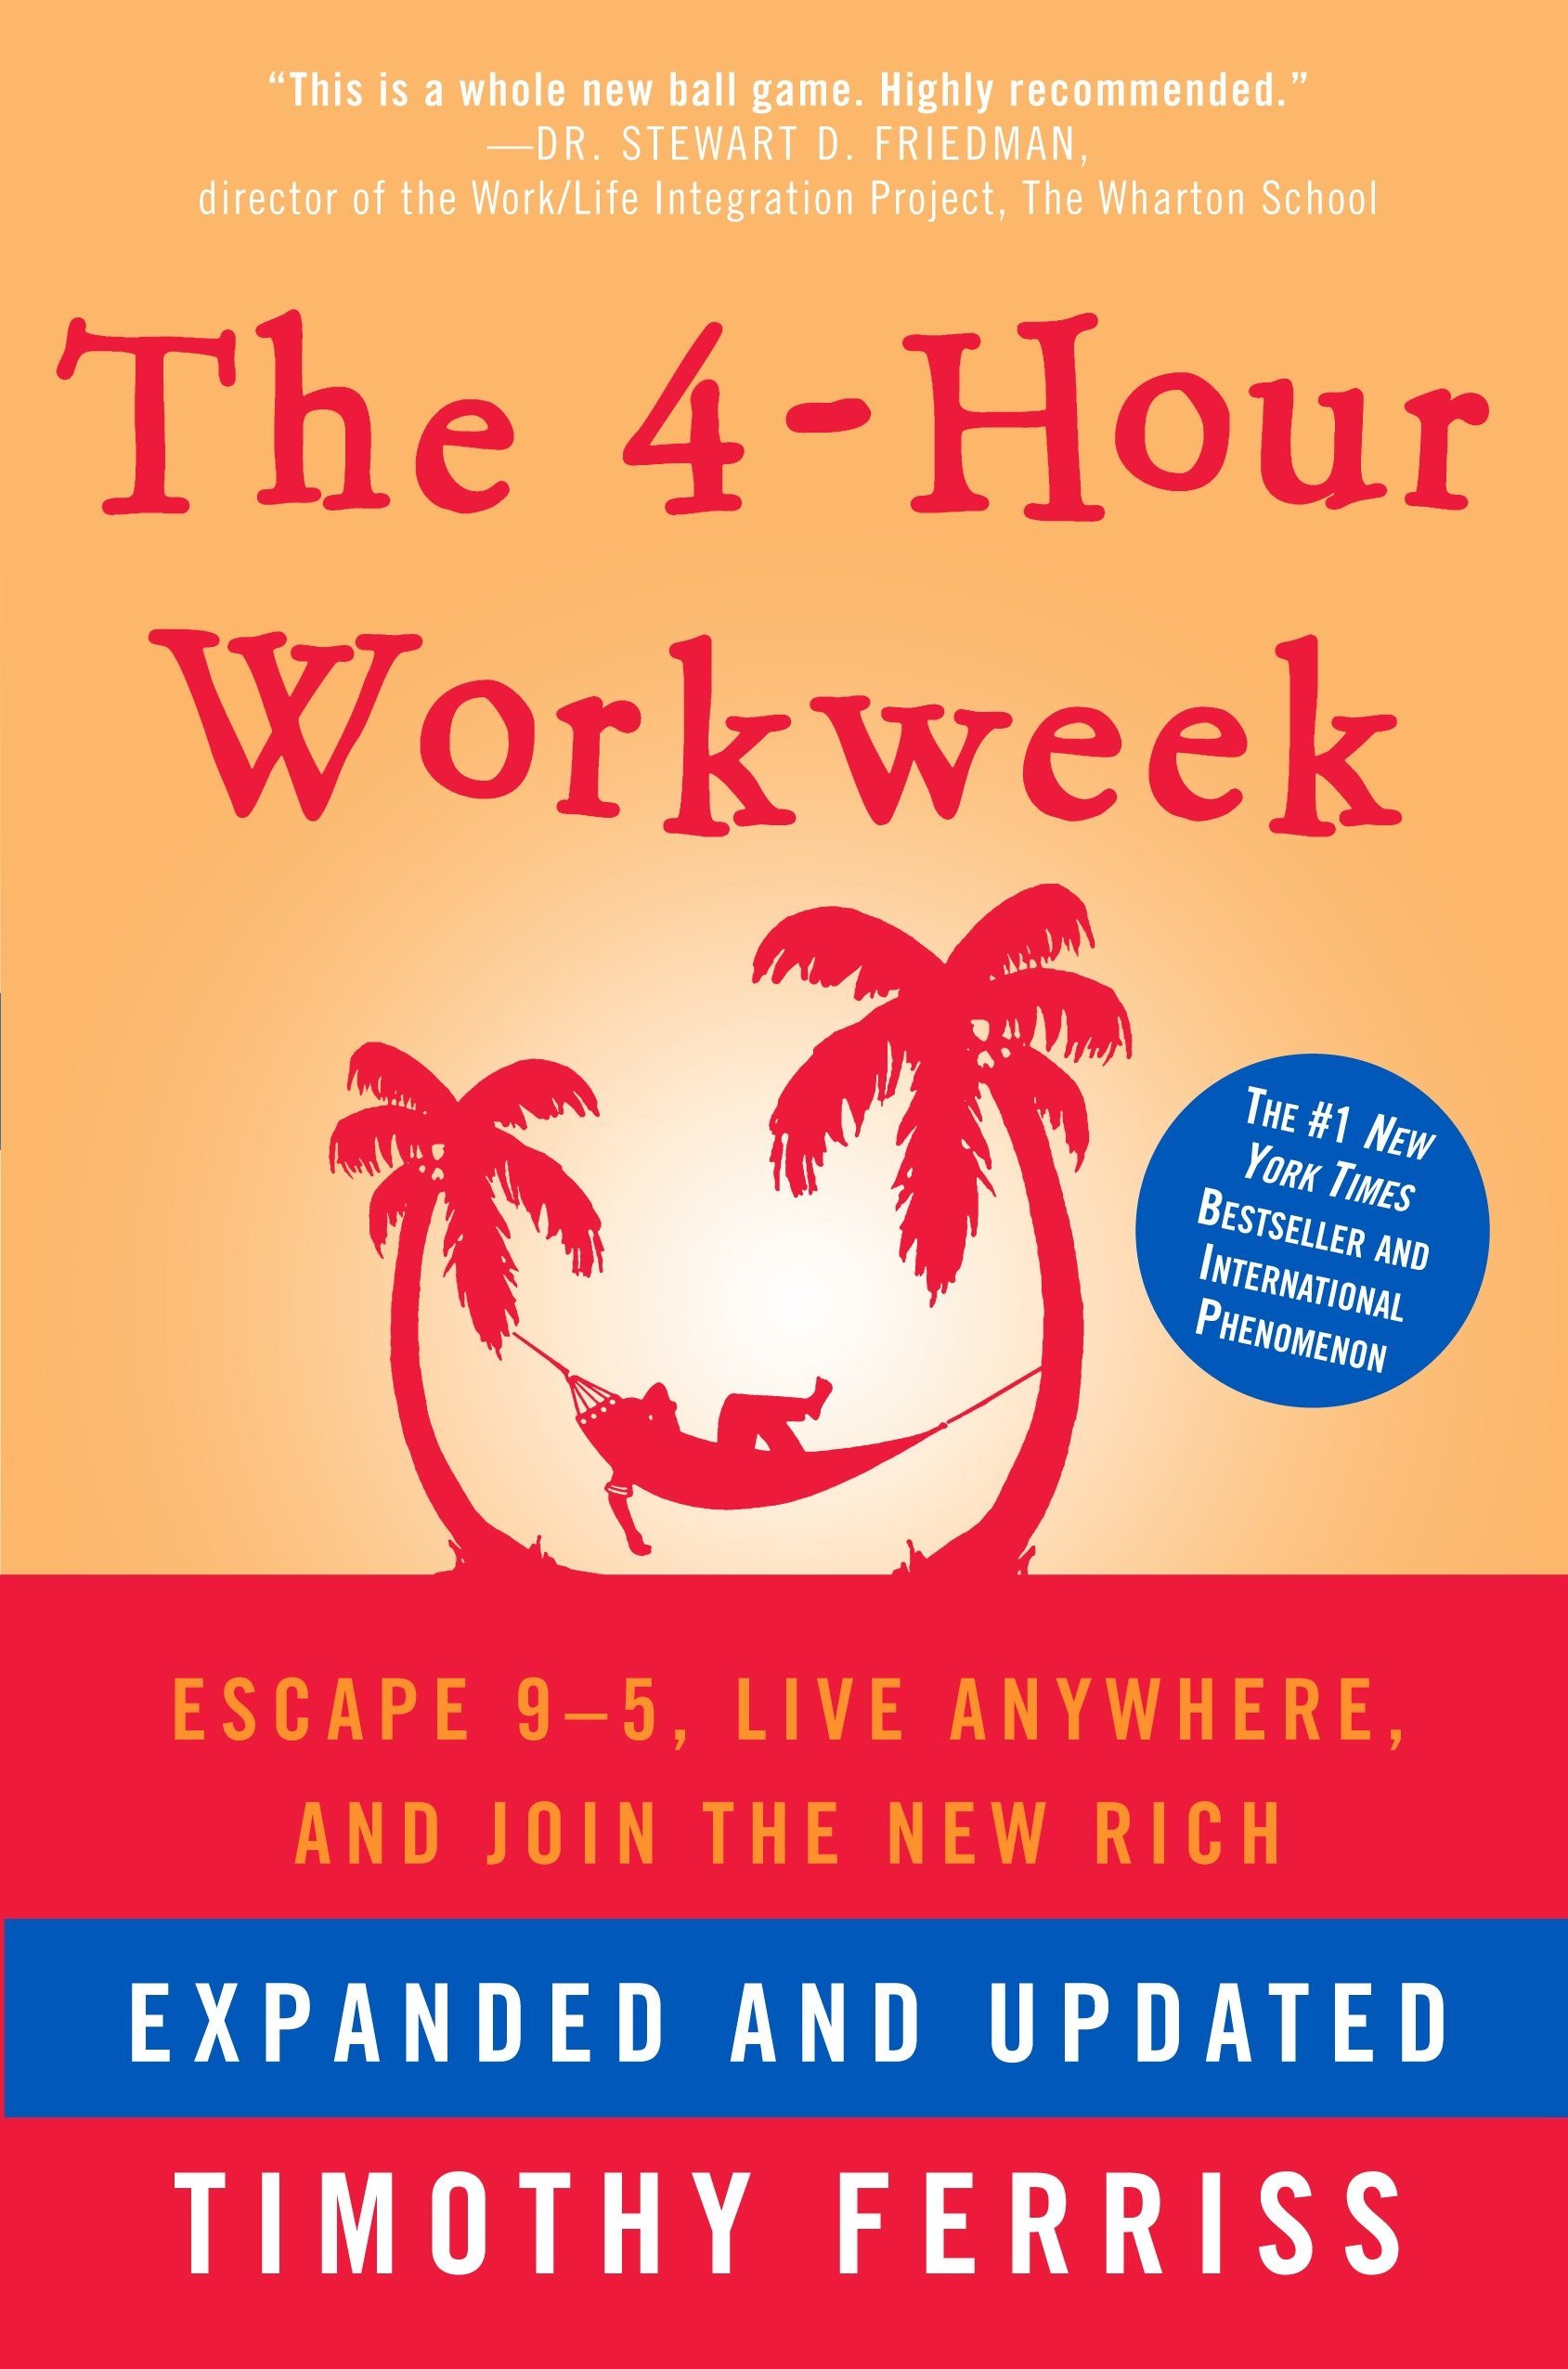 The 4-Hour Workweek (Timothy Ferriss)